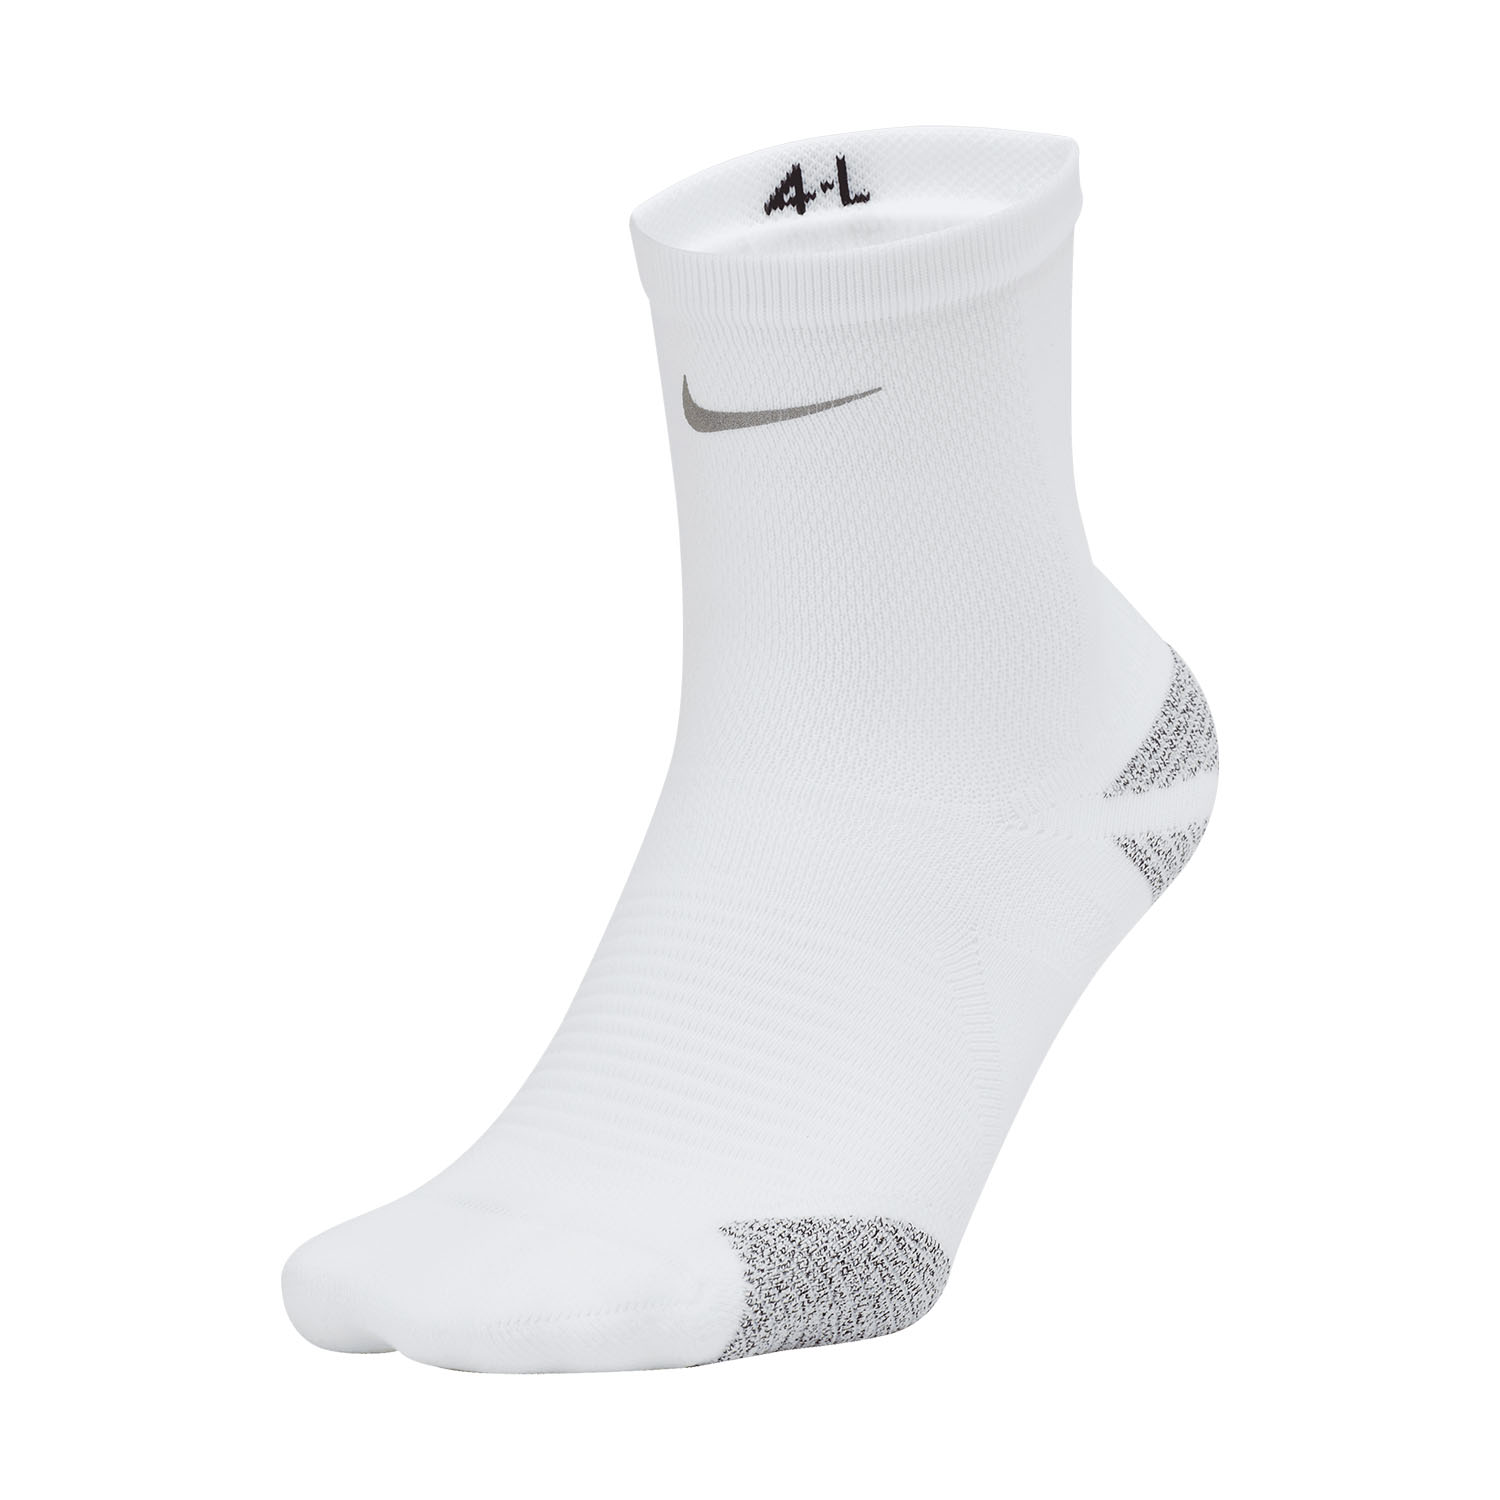 Nike Racing Running Socks - White/Reflective Silver